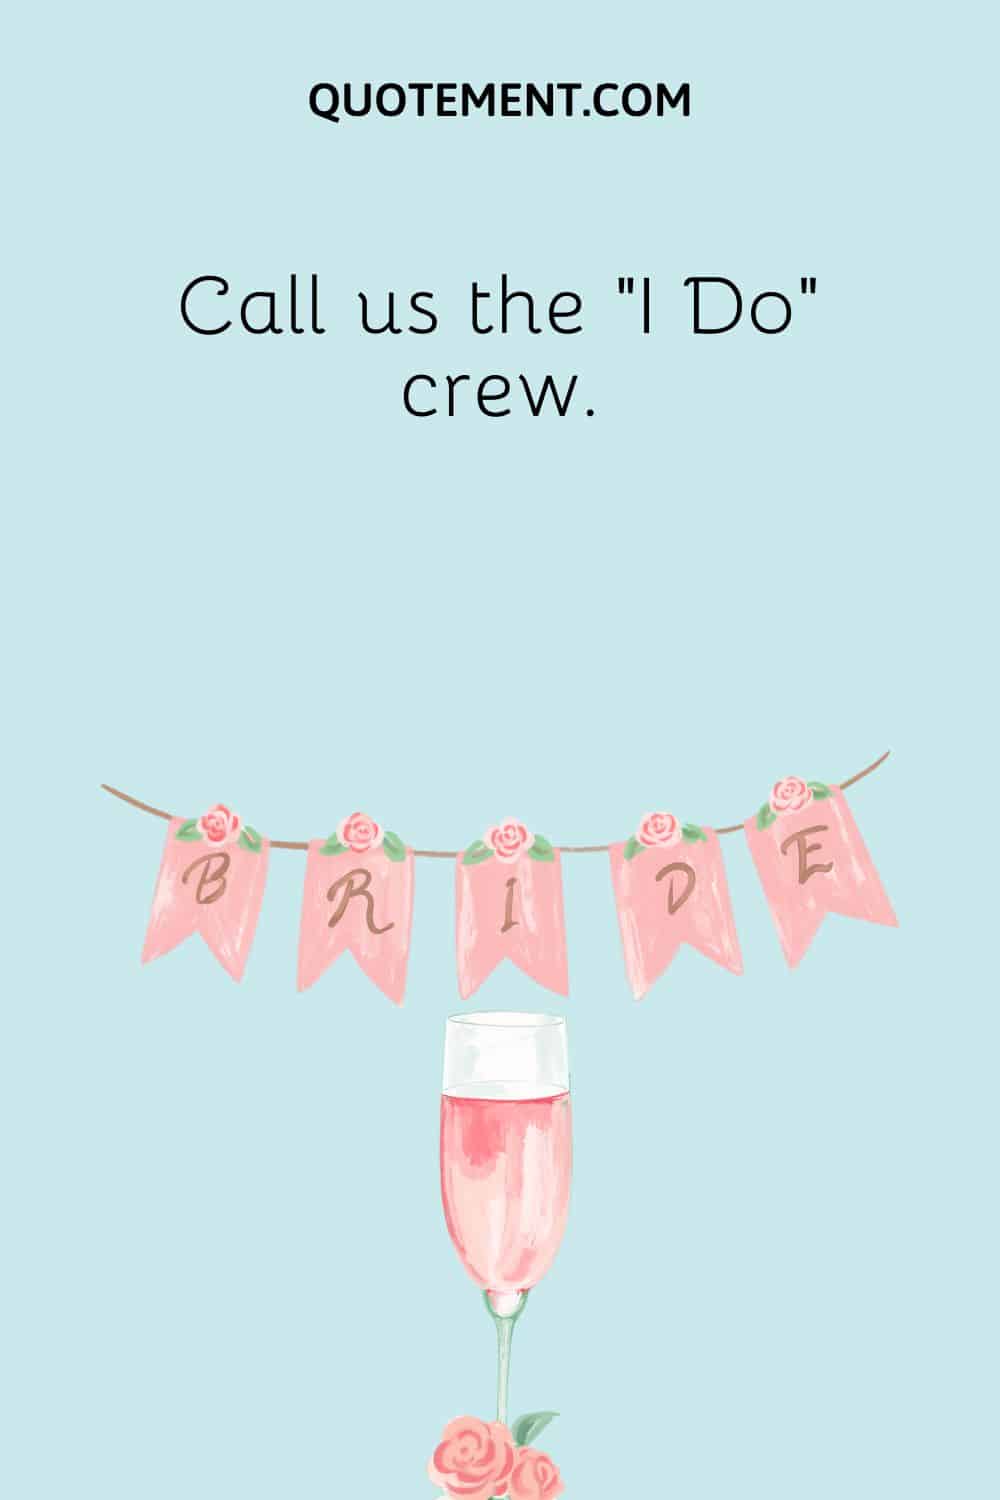 Call us the “I Do” crew.